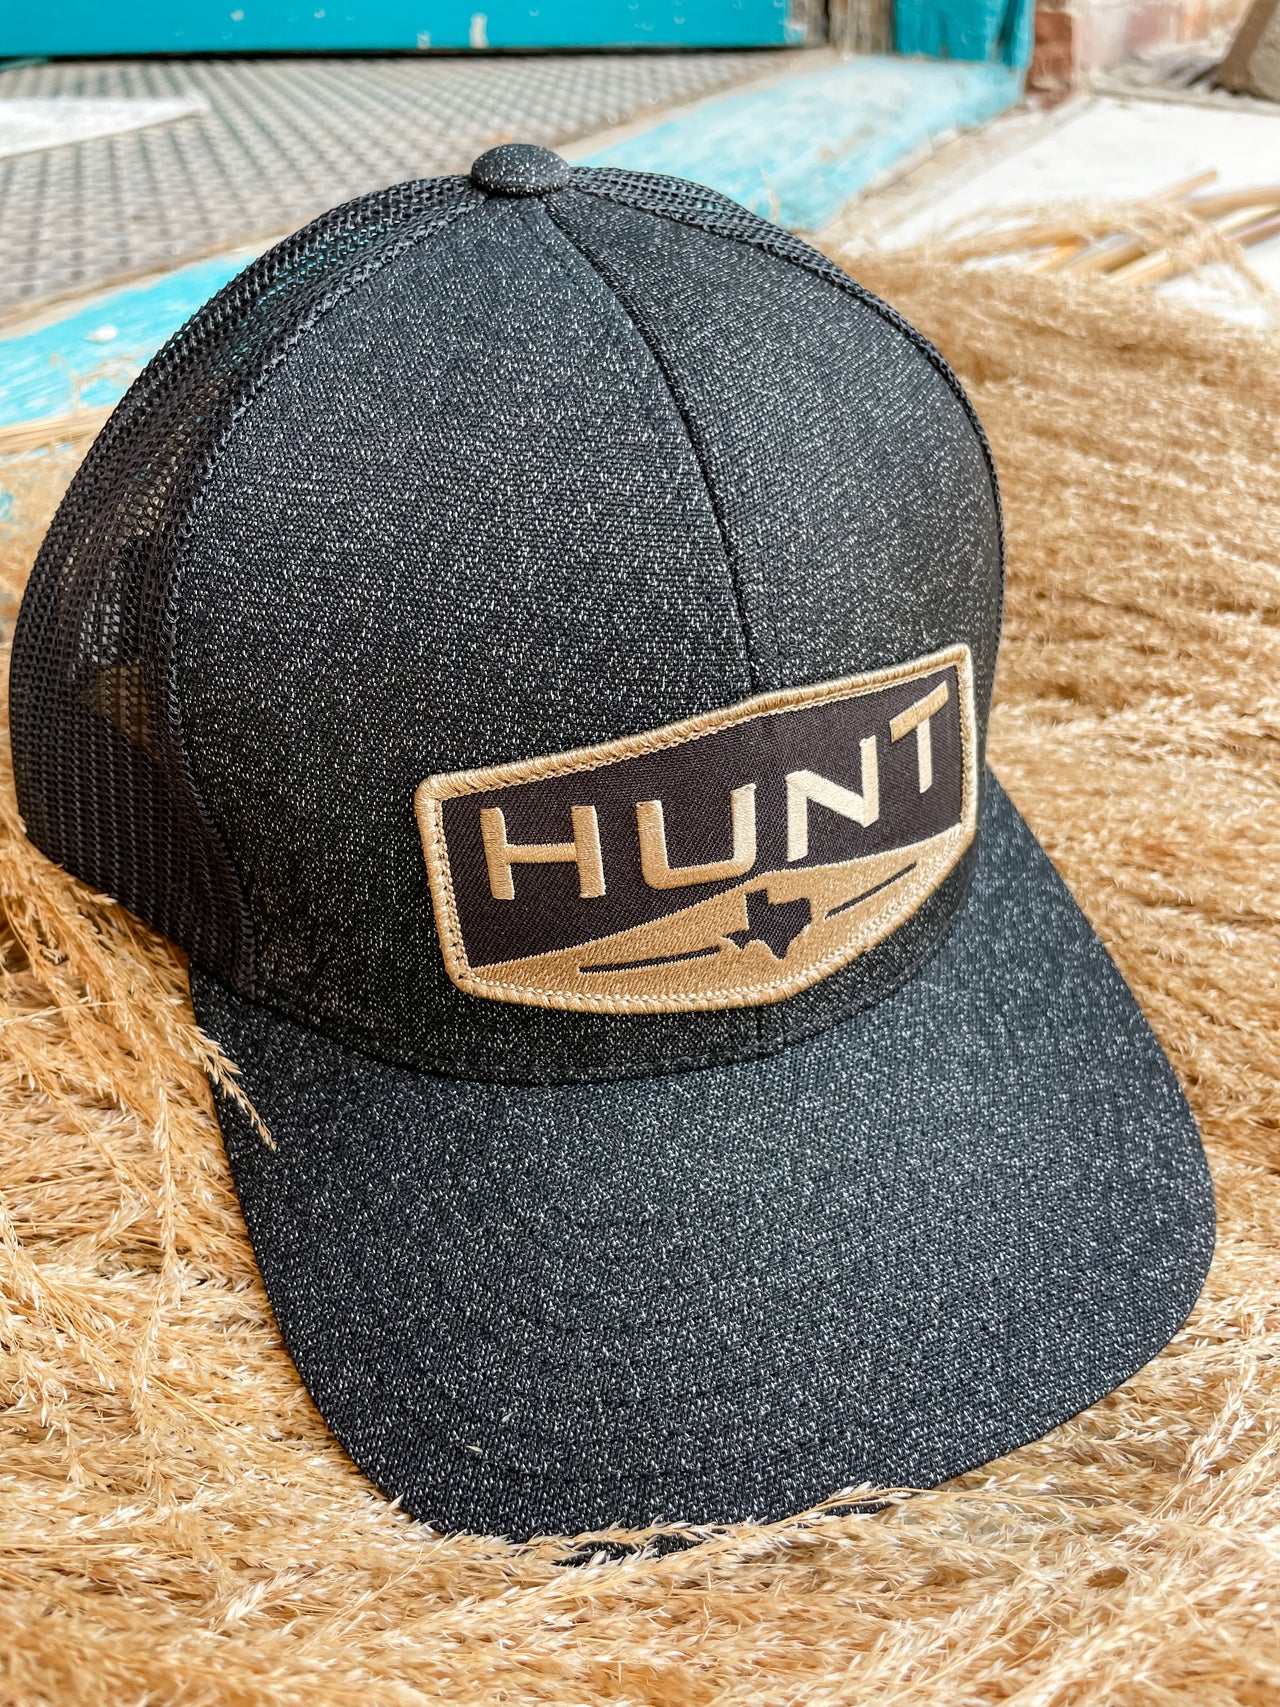 Hunt Texas Denim Hat- Blk/Blk